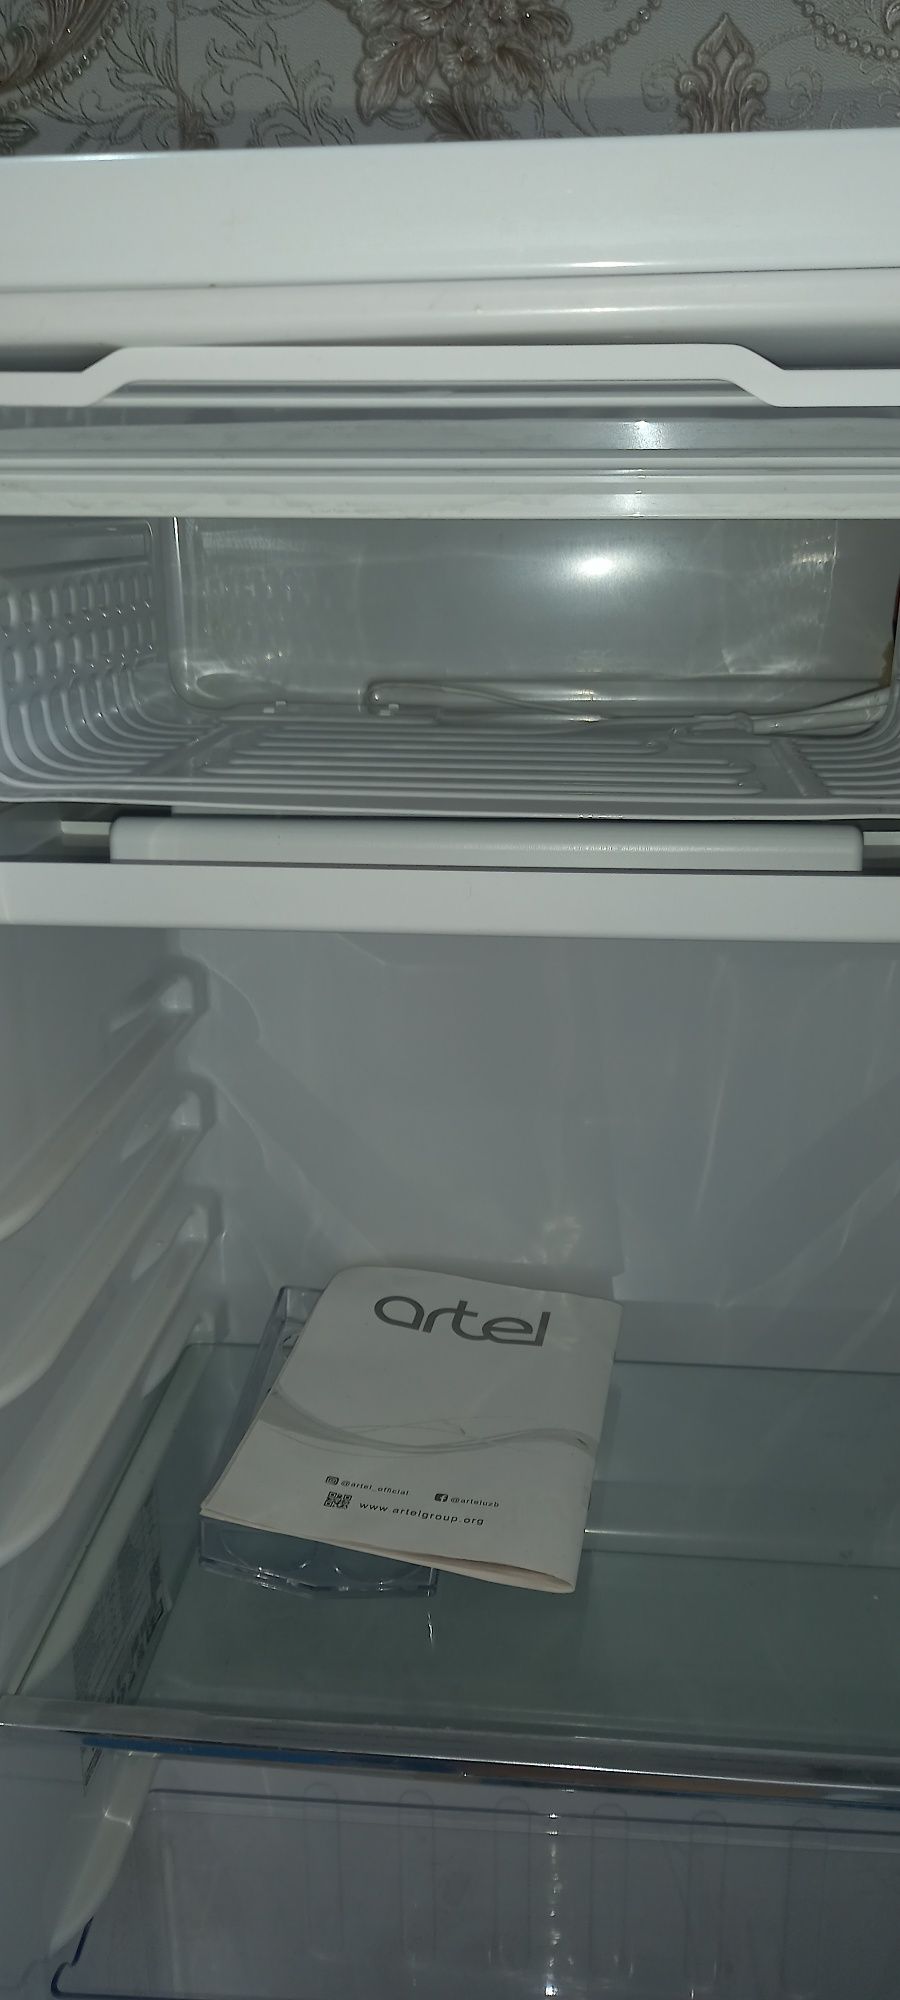 Холодильник артель